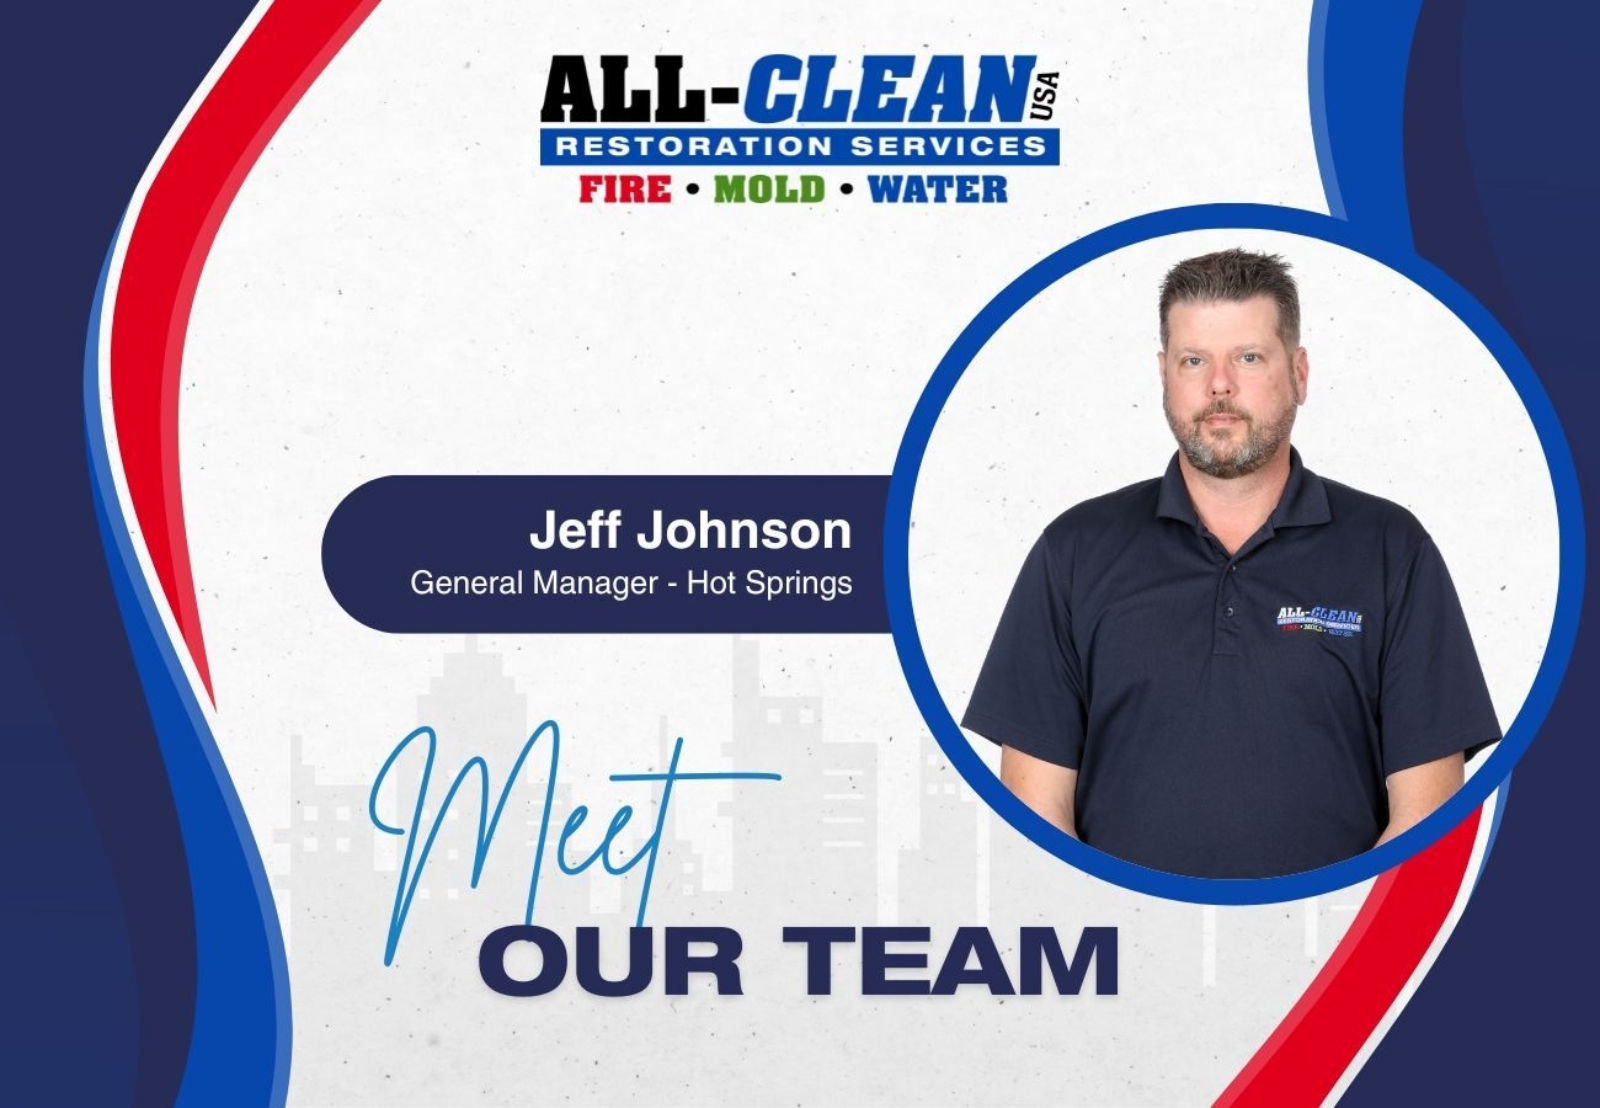 Meet the Team - Introducing Jeff Johnson